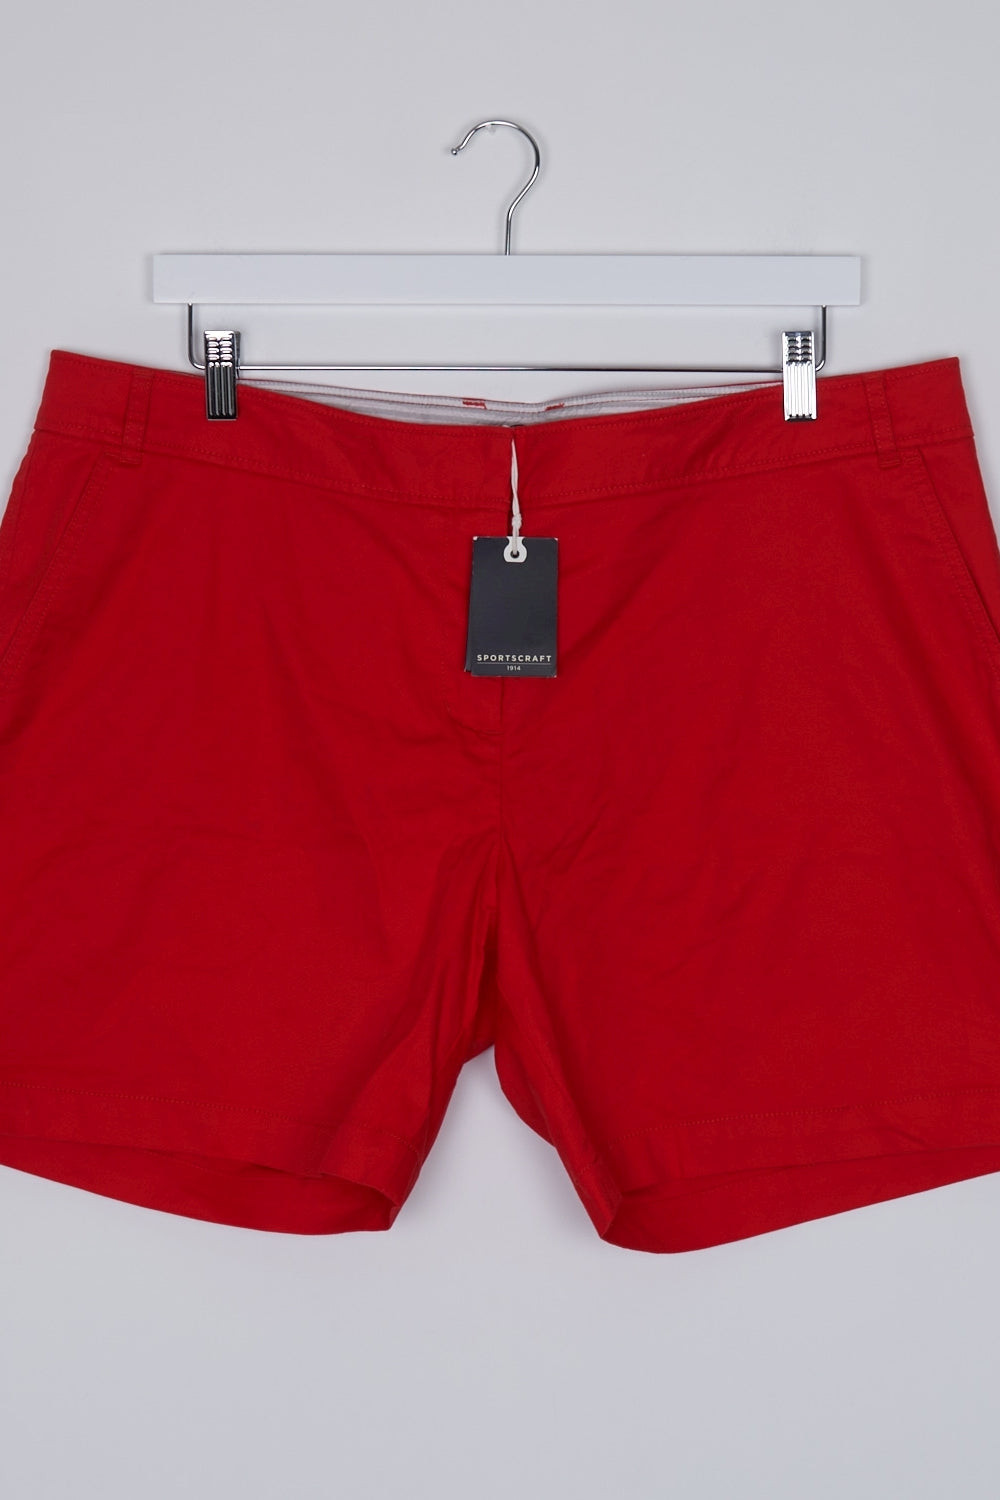 Sportscraft Red Chino Shorts 18